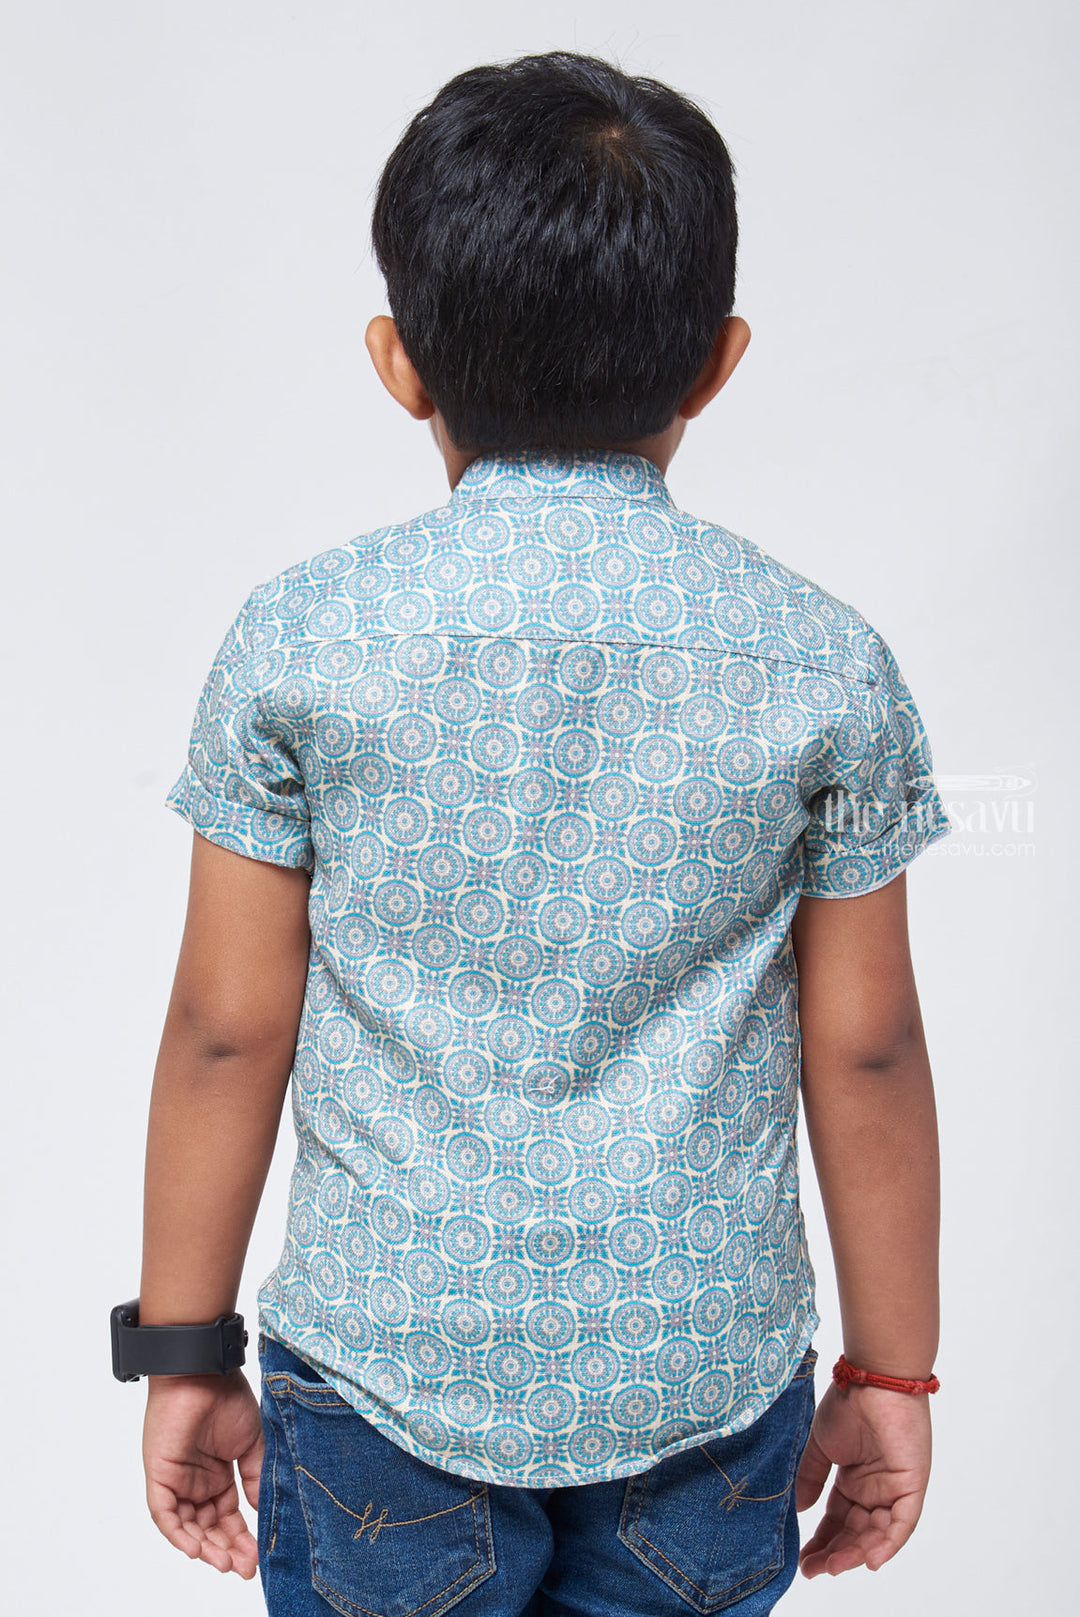 The Nesavu Boys Linen Shirt Exquisite Ajrakh Hand Block Print Boys' Shirt: Artisanal Craftsmanship at Its Finest Nesavu Ajrakh Hand Block Print Boys Shirt | Printed Shirt for Boys | The Nesavu